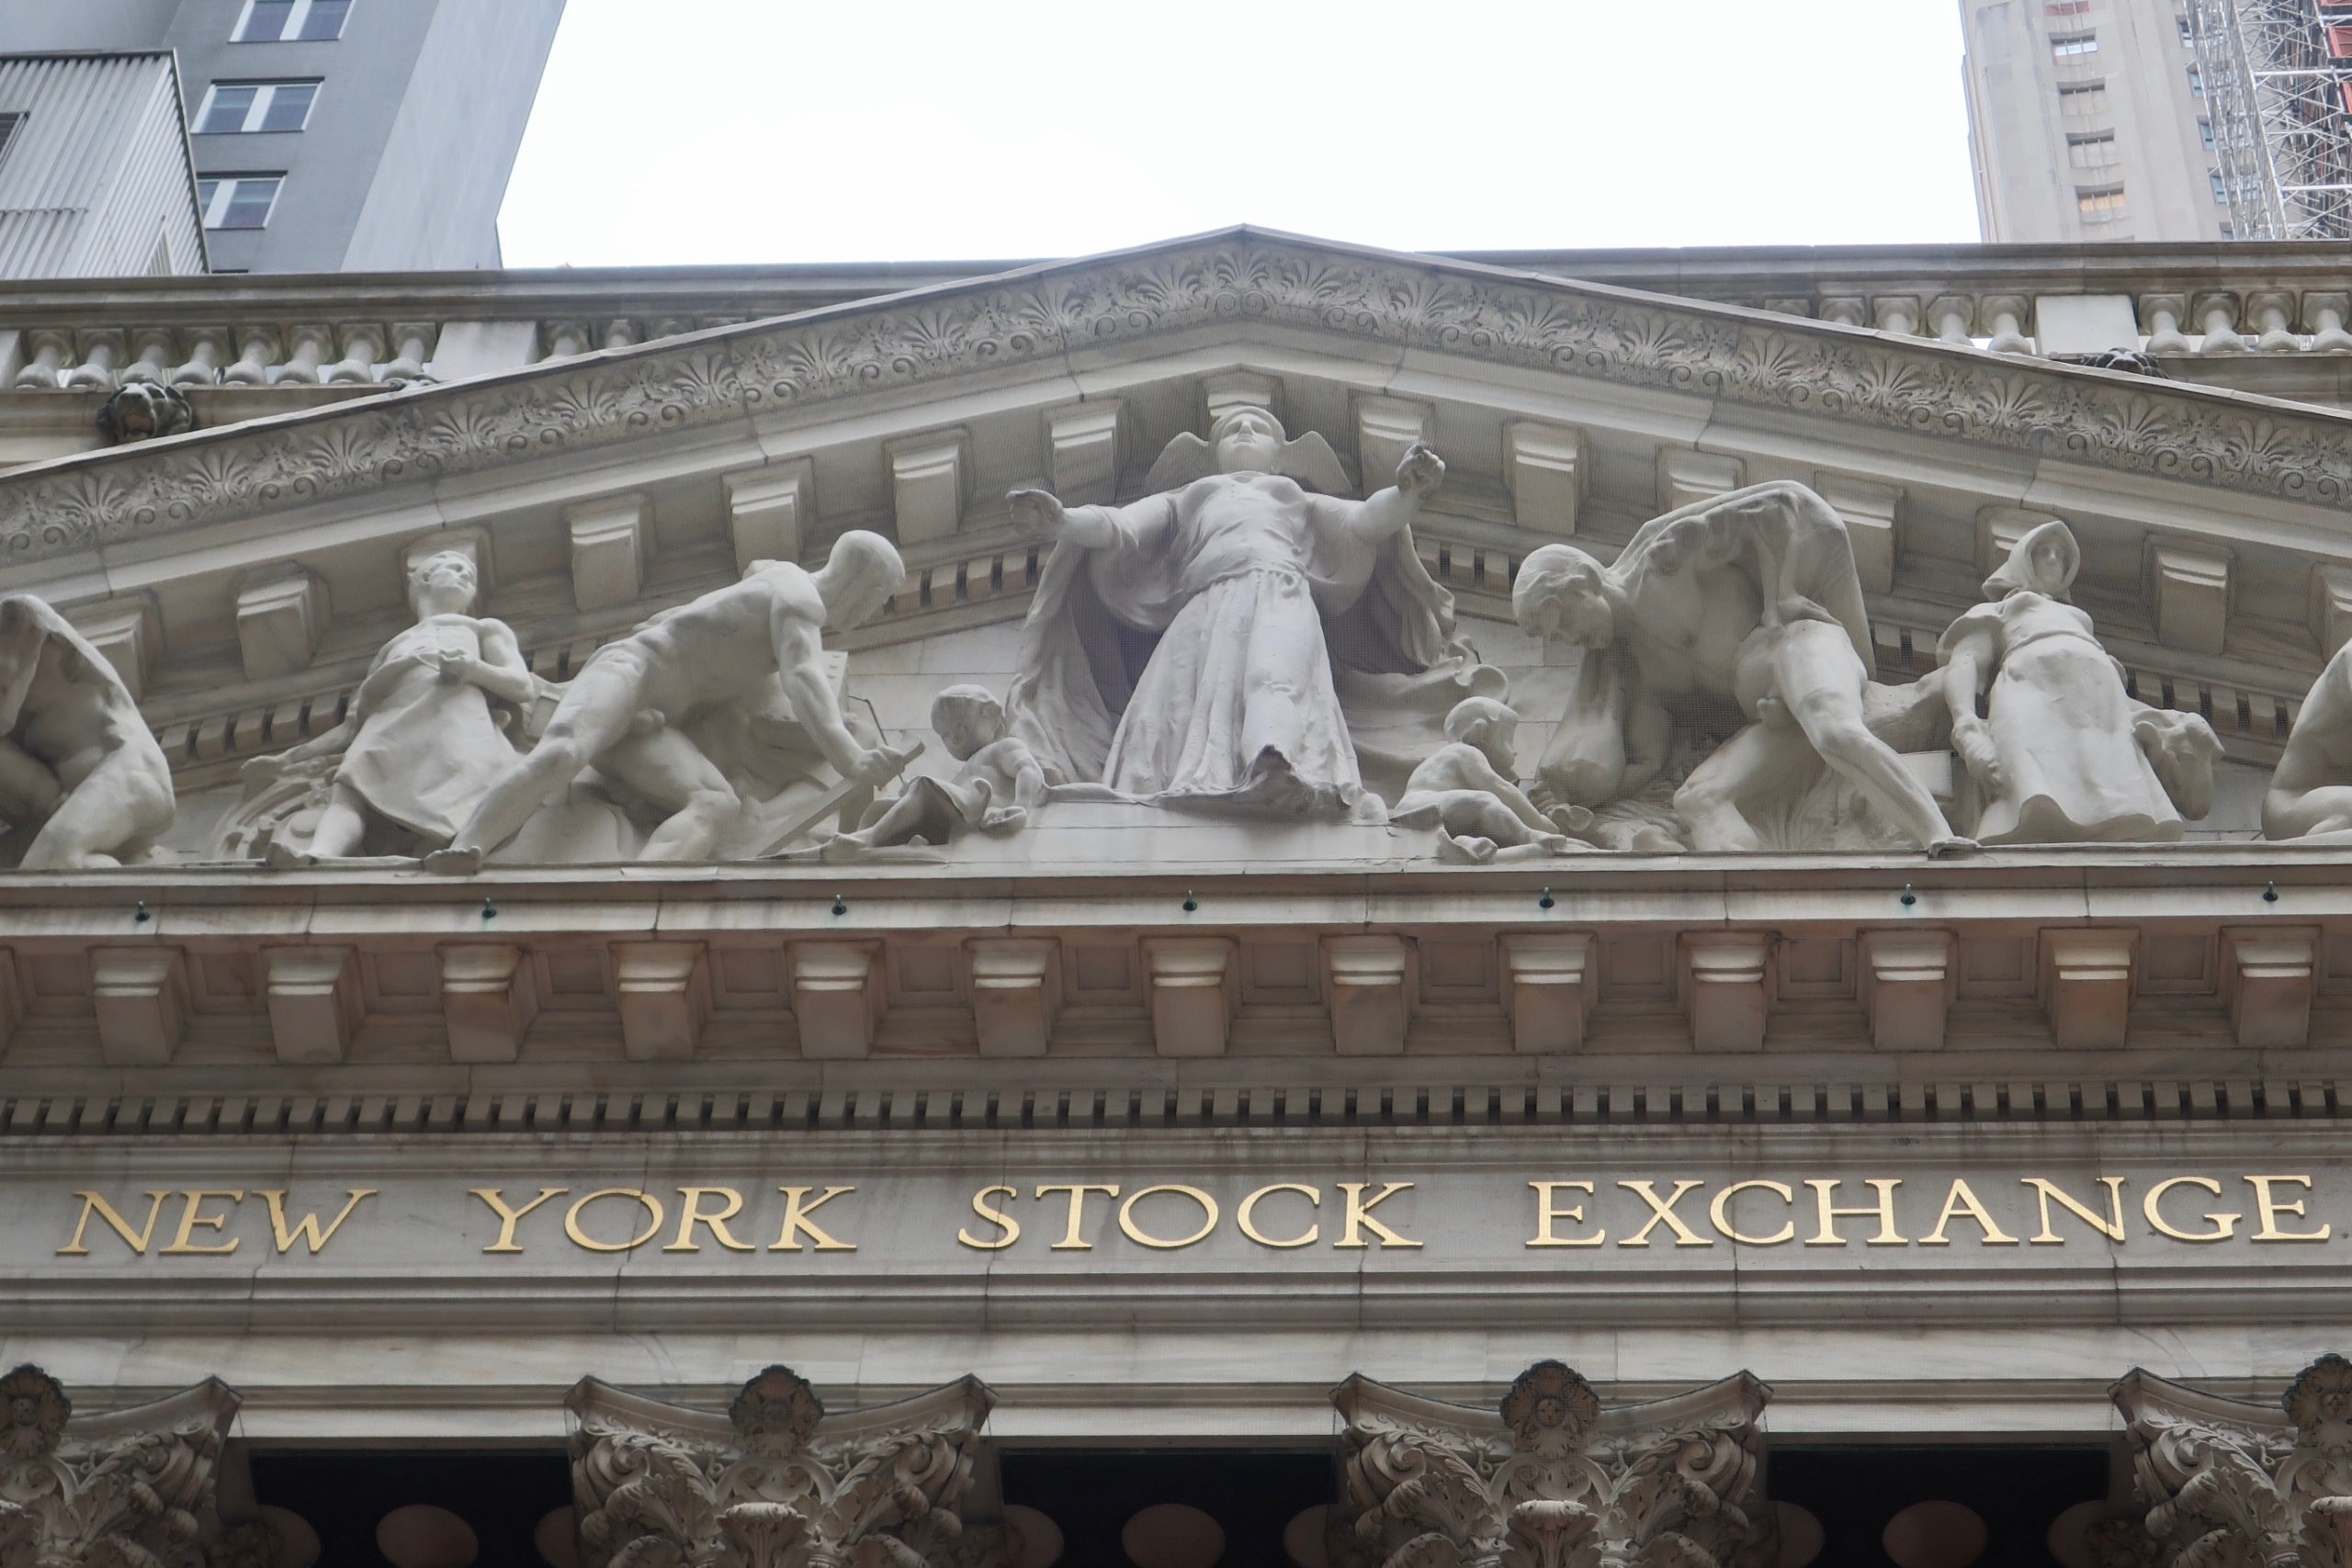 The New York Stock Exchange Building